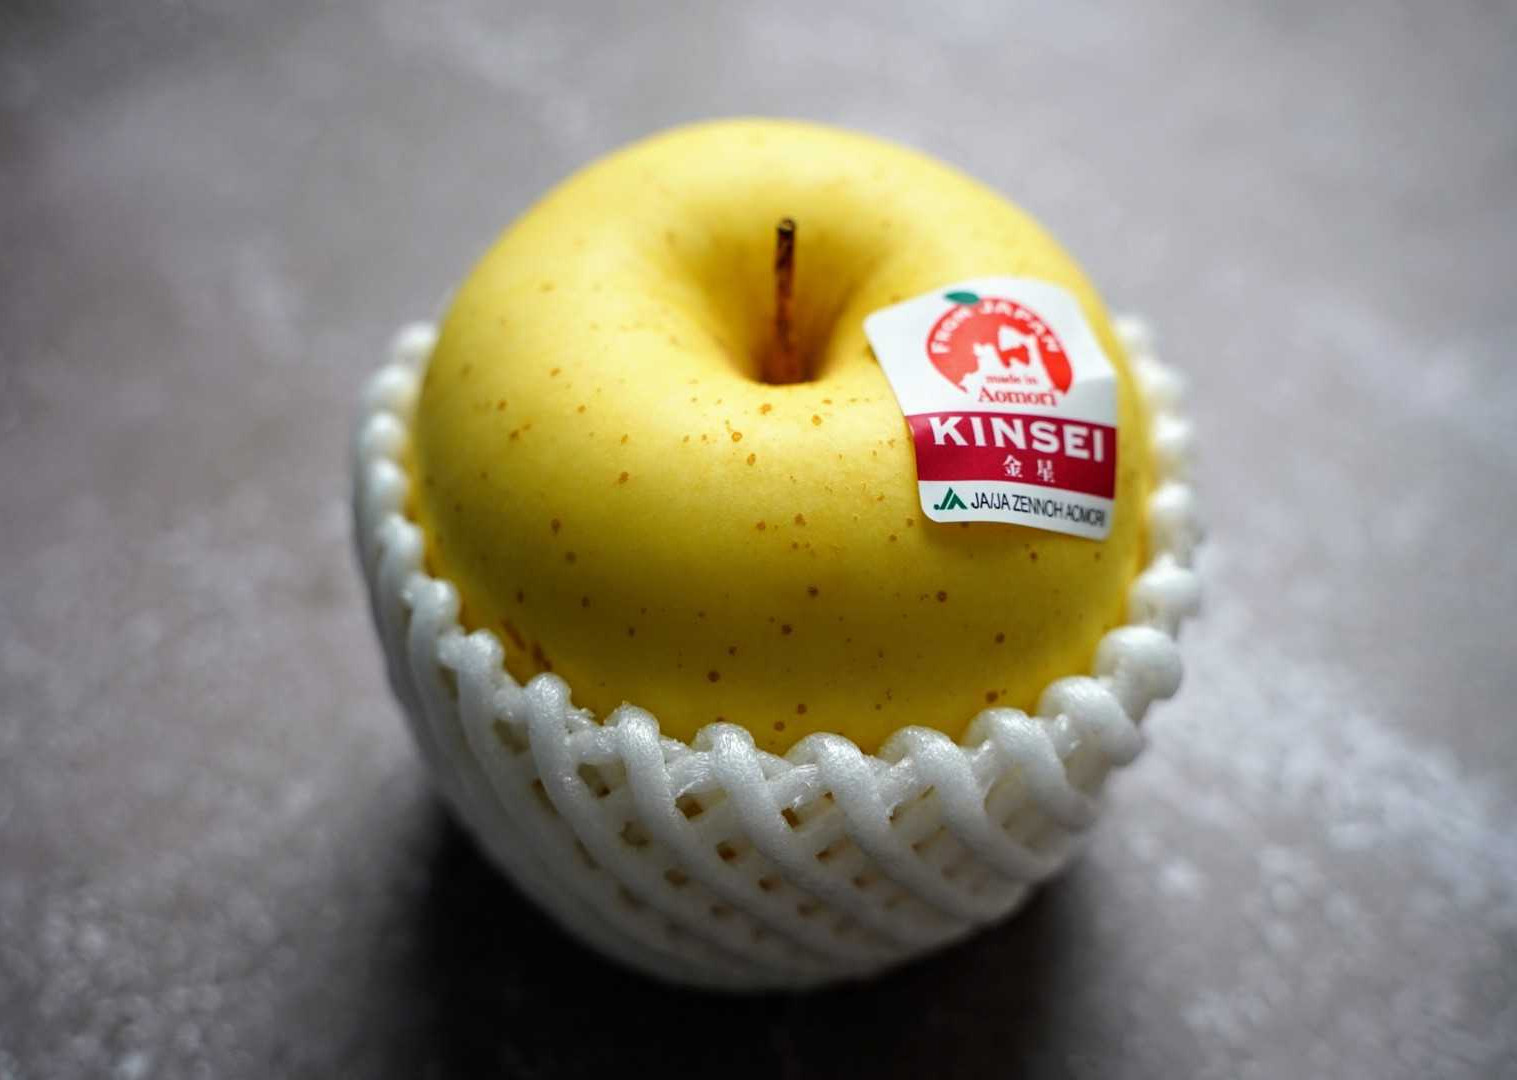 Kinsei Apples | Local Apple From Aomori Prefecture, Japan